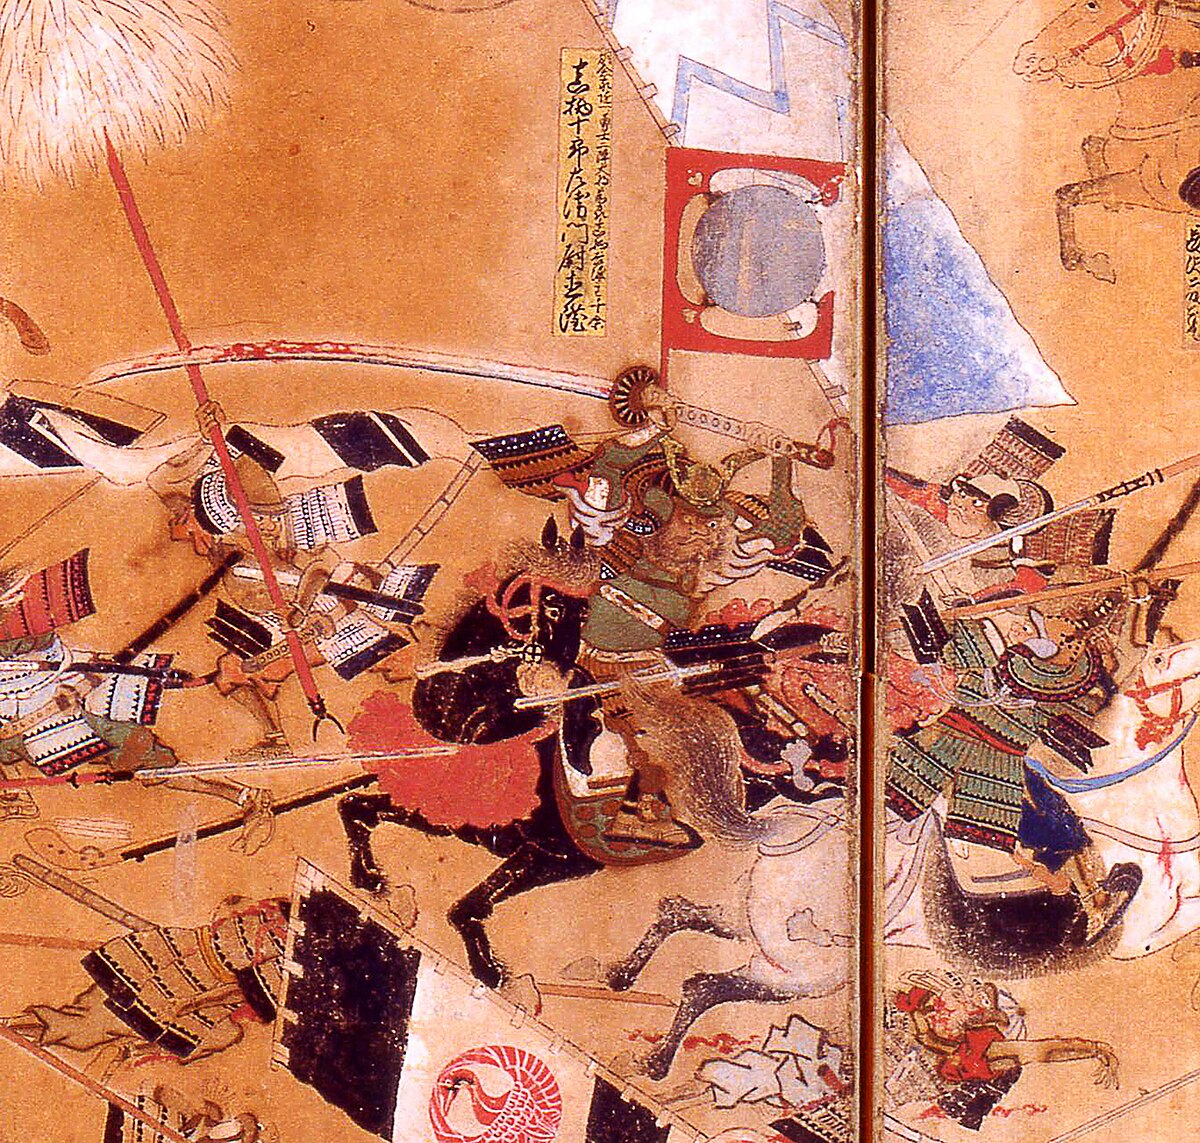 Samurai with Odachi sword on horse.jpg